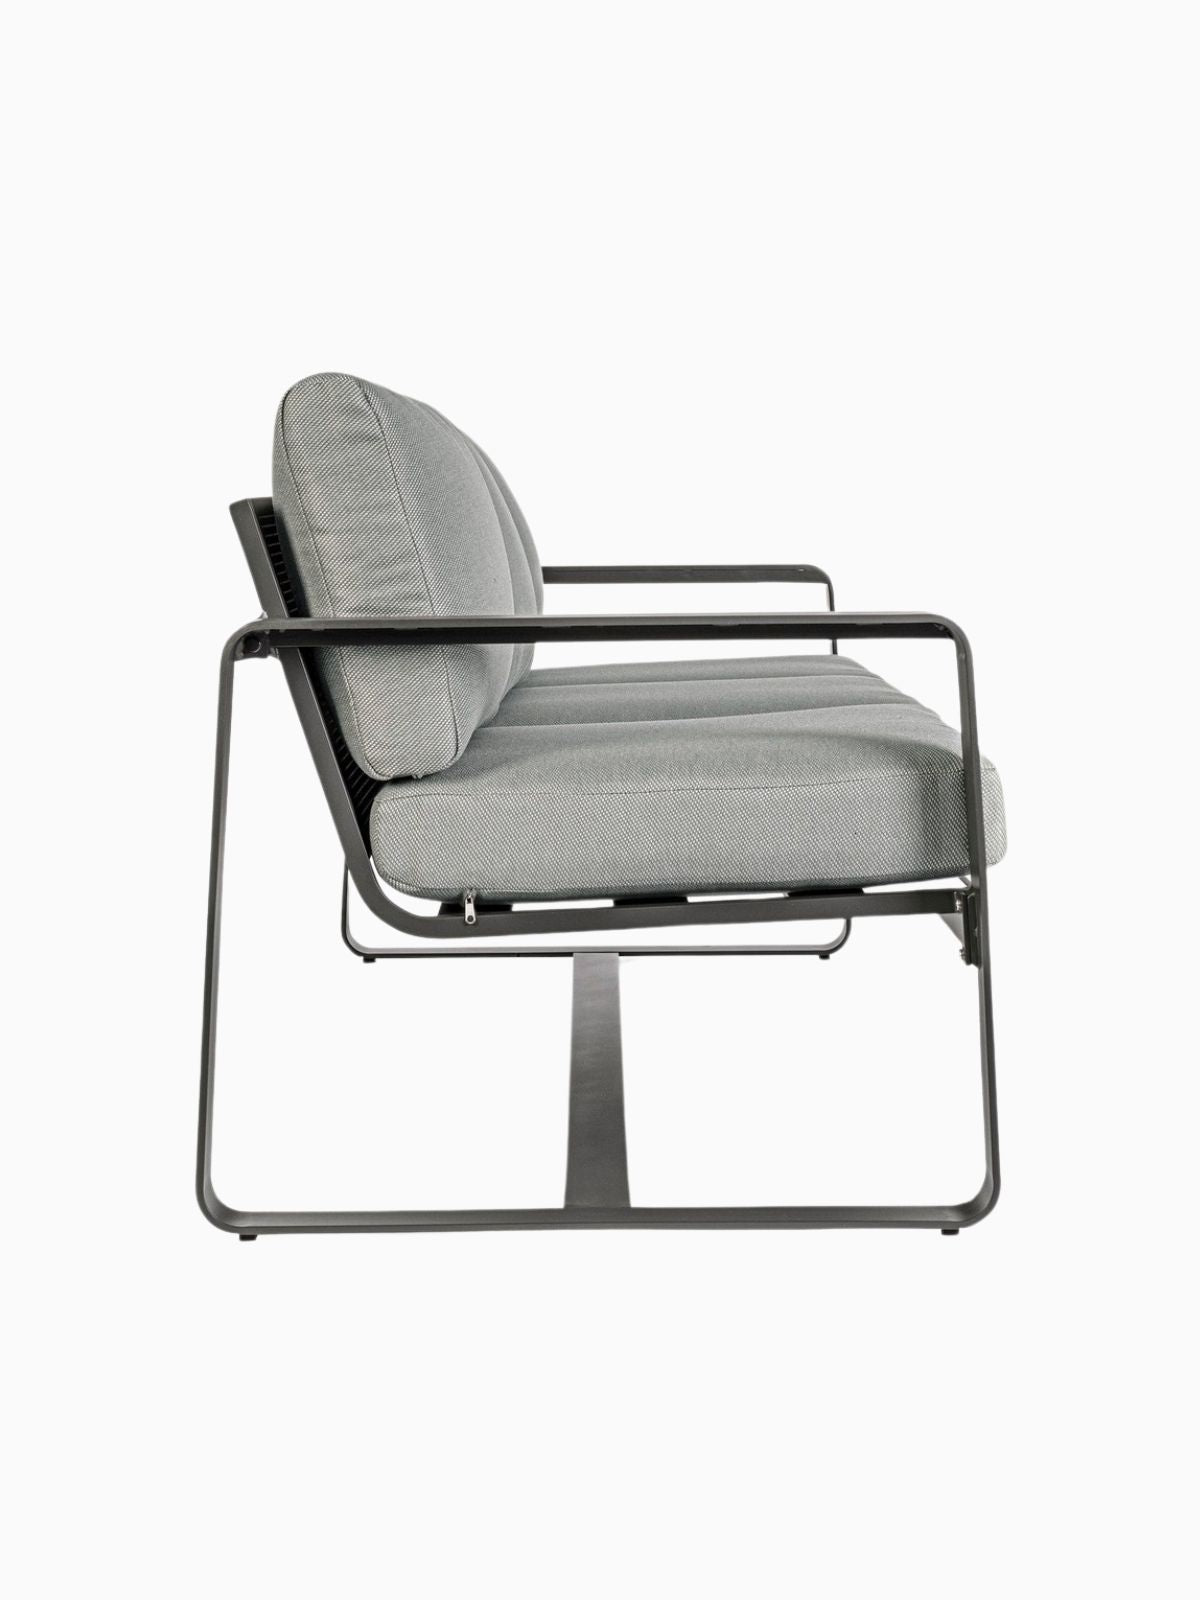 Divano da esterno 3 sedute Merrigan in alluminio, colore grigio-3